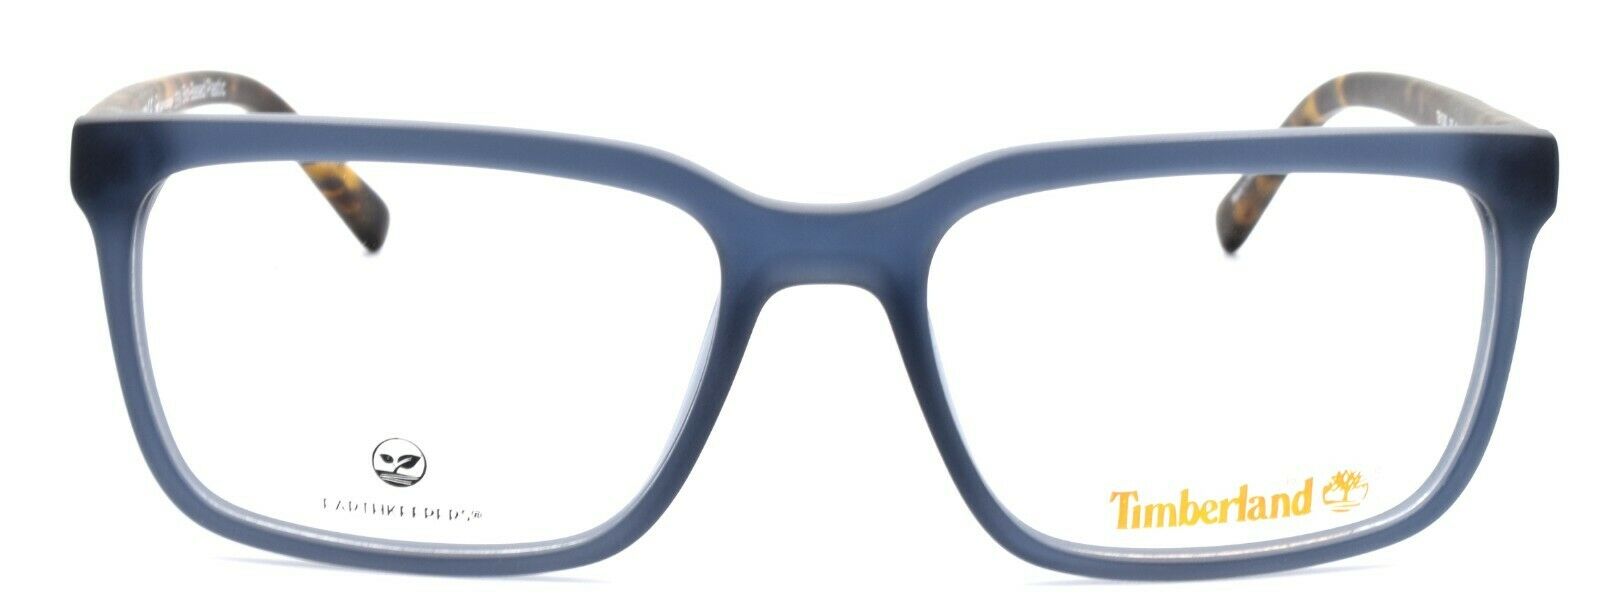 2-TIMBERLAND TB1580 092 Men's Eyeglasses Frames 54-17-145 Blue / Tortoise + CASE-664689913350-IKSpecs